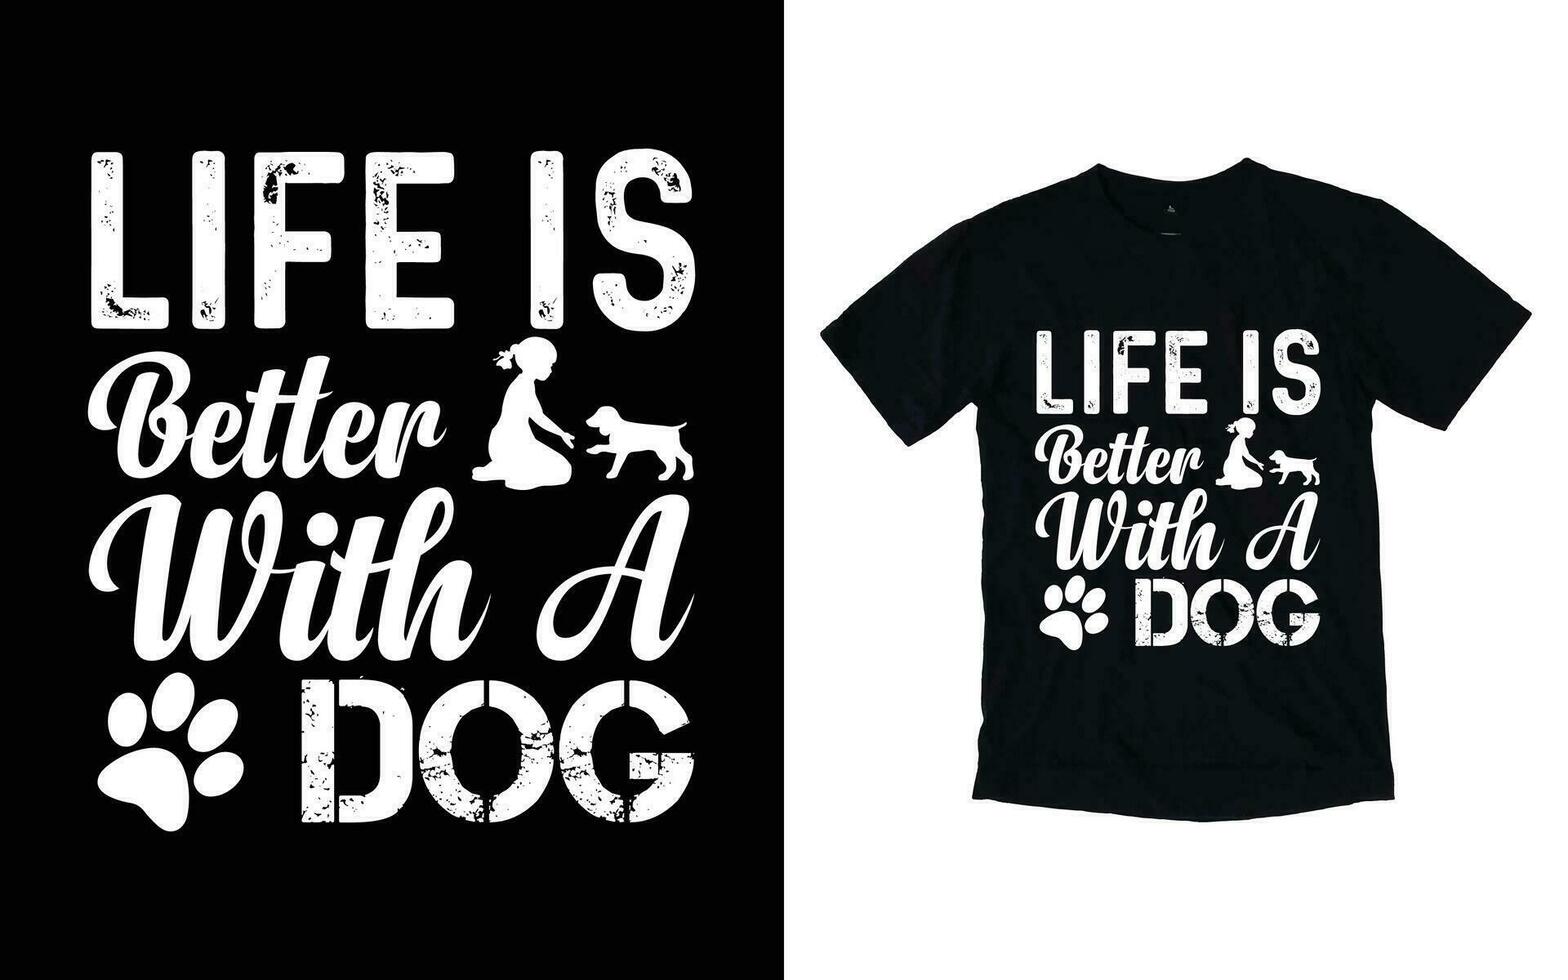 hund typografi t-shirt design vektor